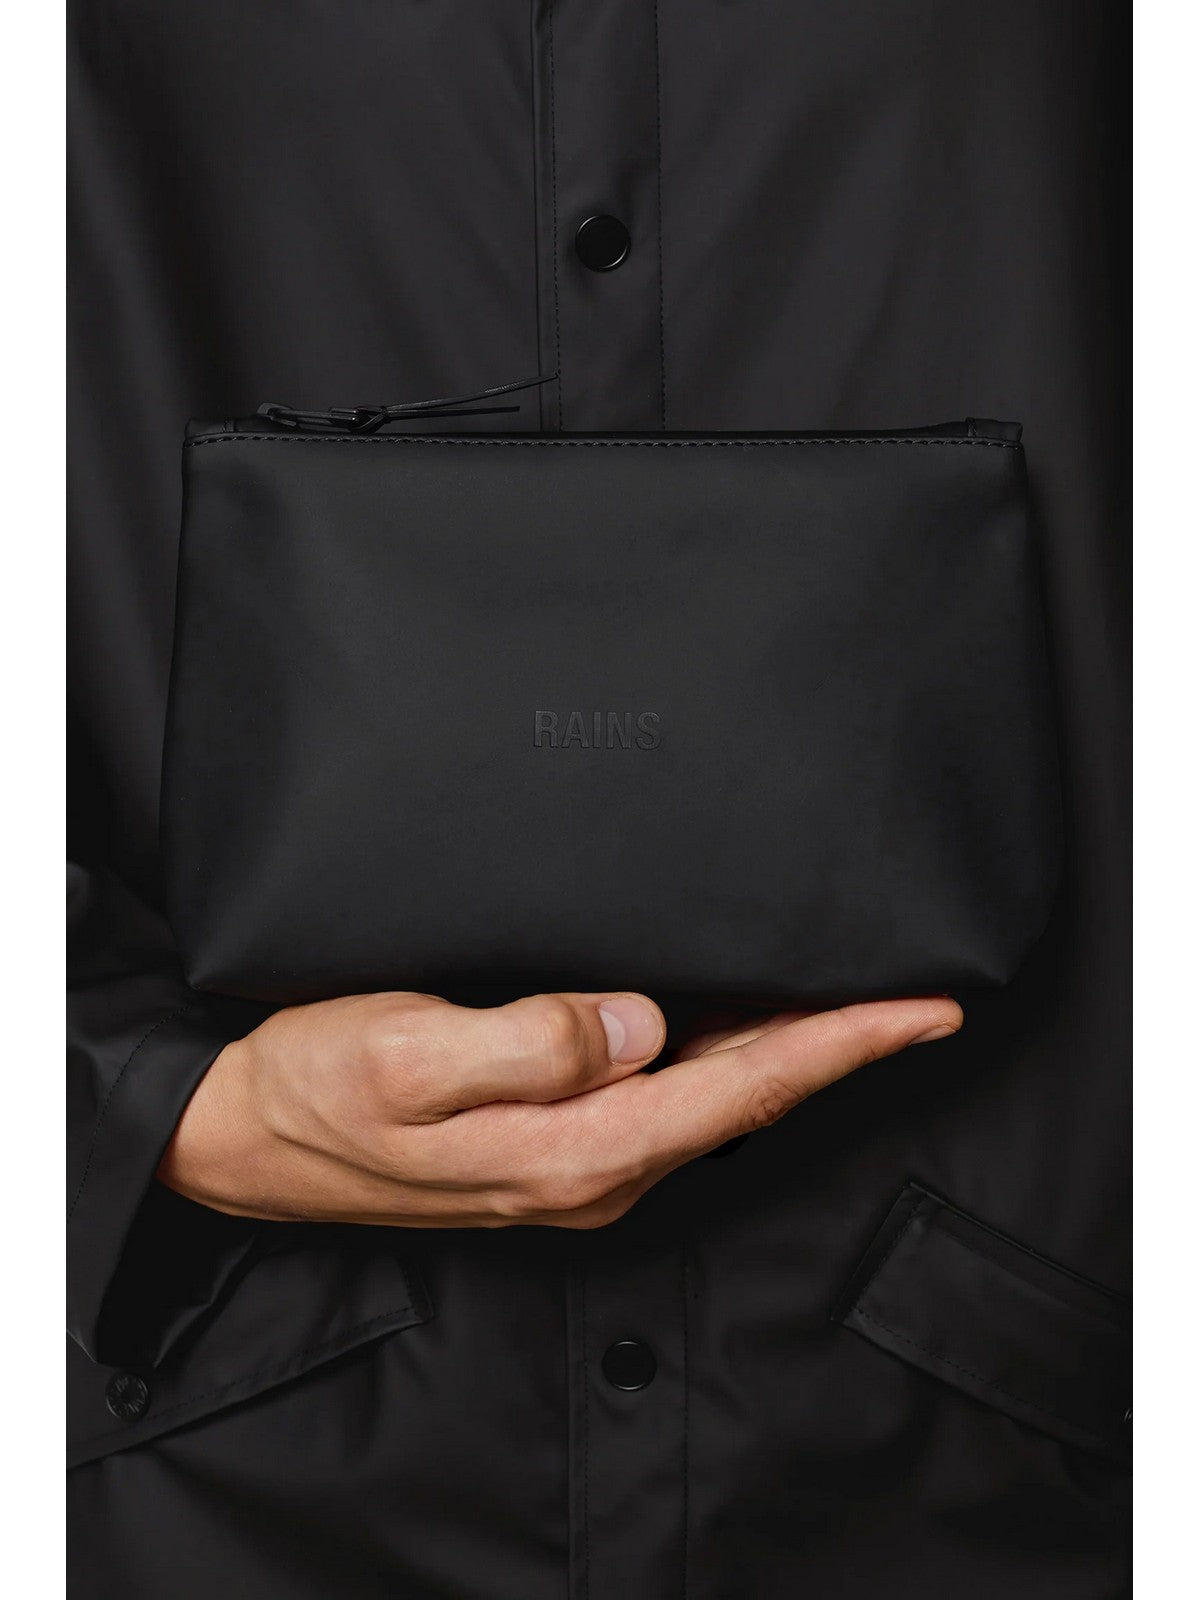 RAINS Pochette Unisex adulto Cosmetic Bag W3 15600 01 Black Nero